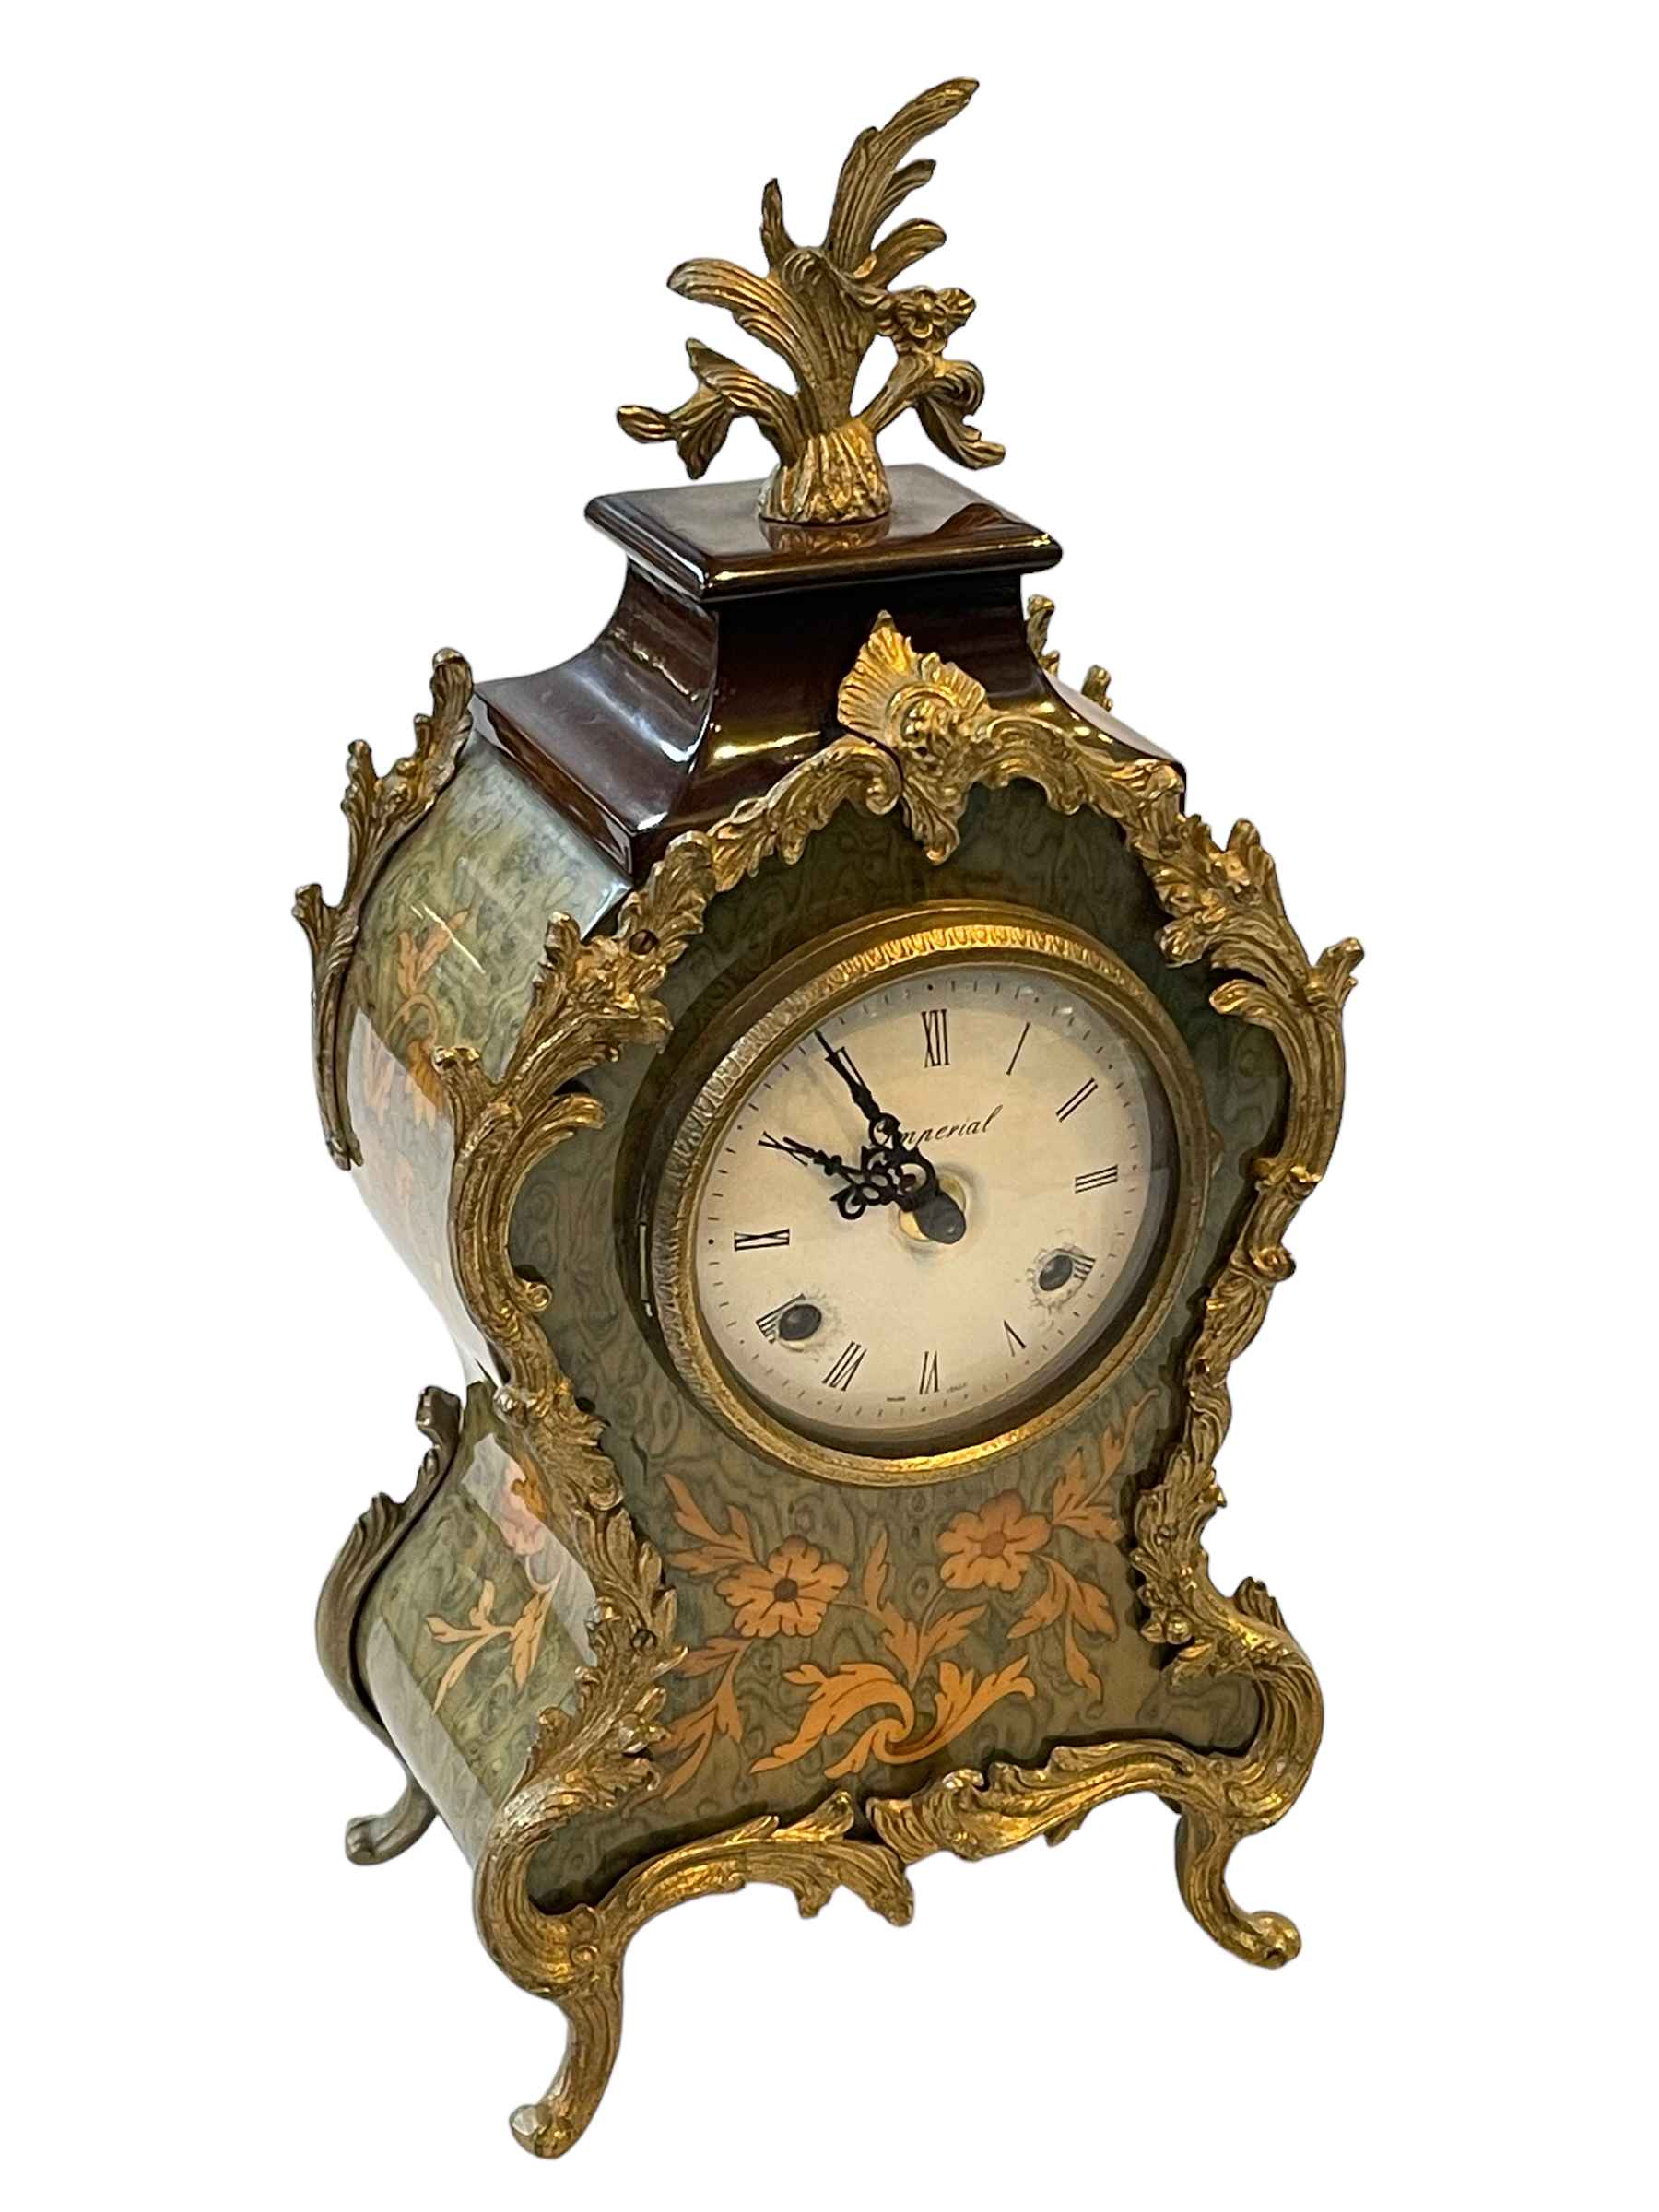 Italian ornate gilt mounted mantel clock with German striking movement, 37cm.